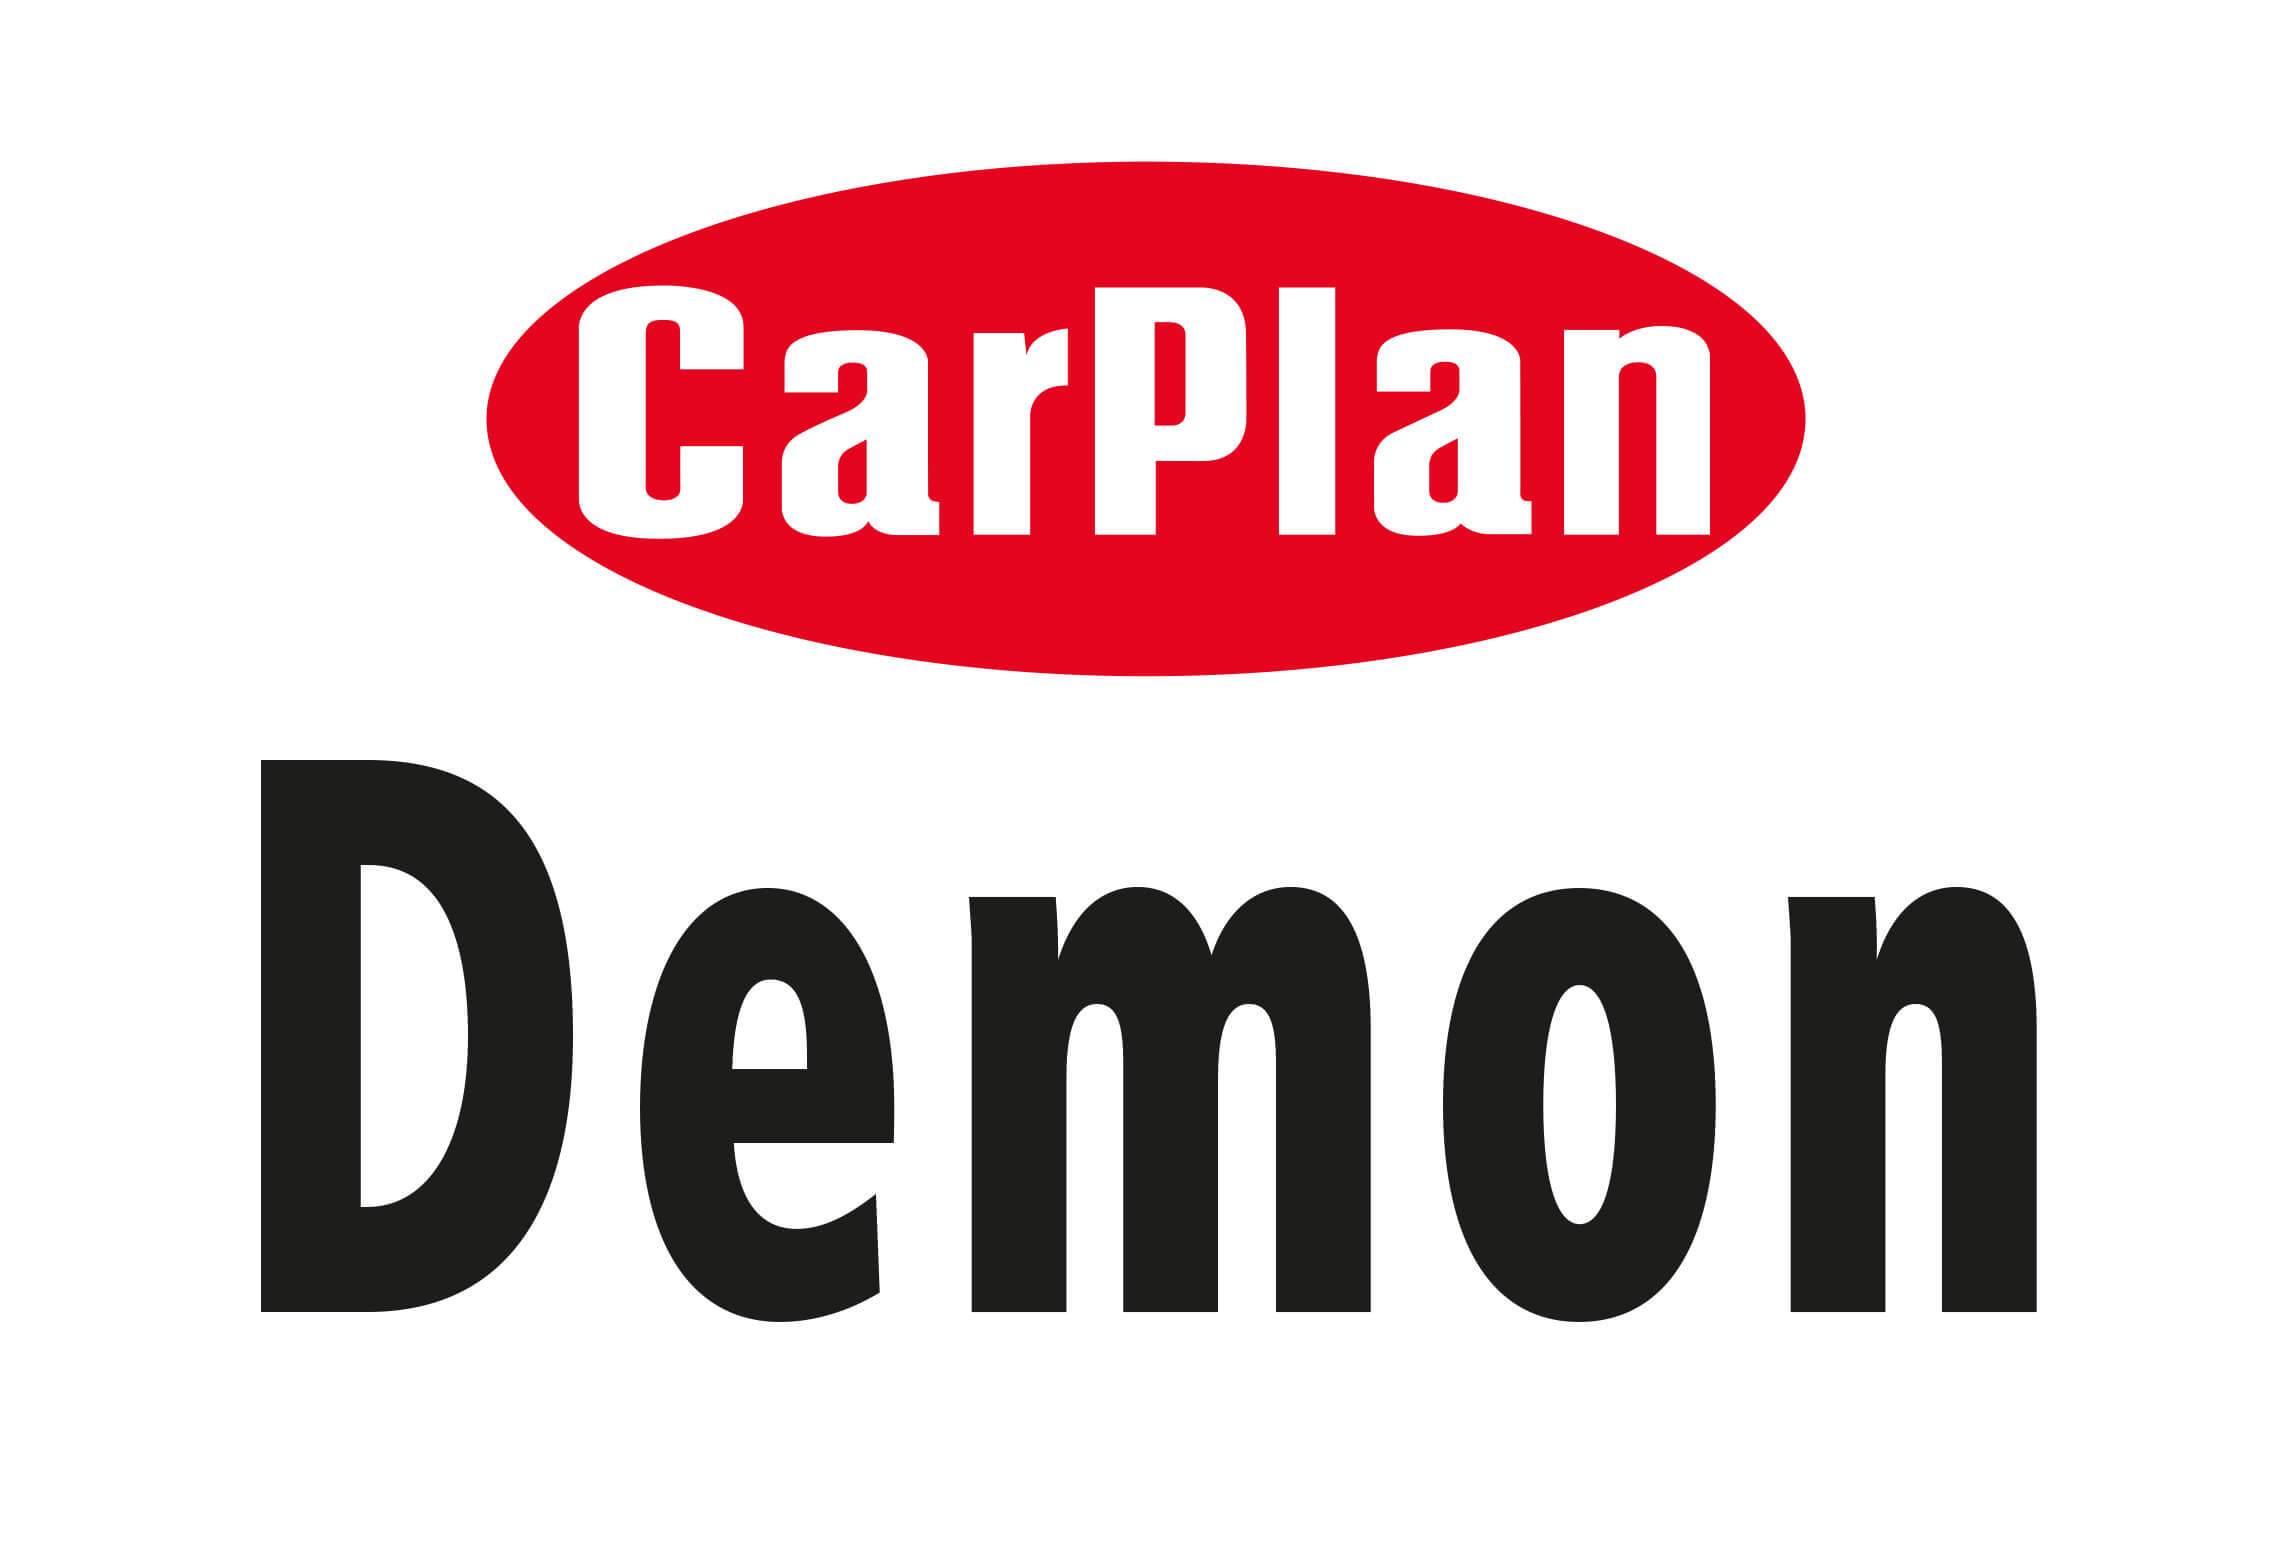 logotyp firmy CARPLAN DEMON